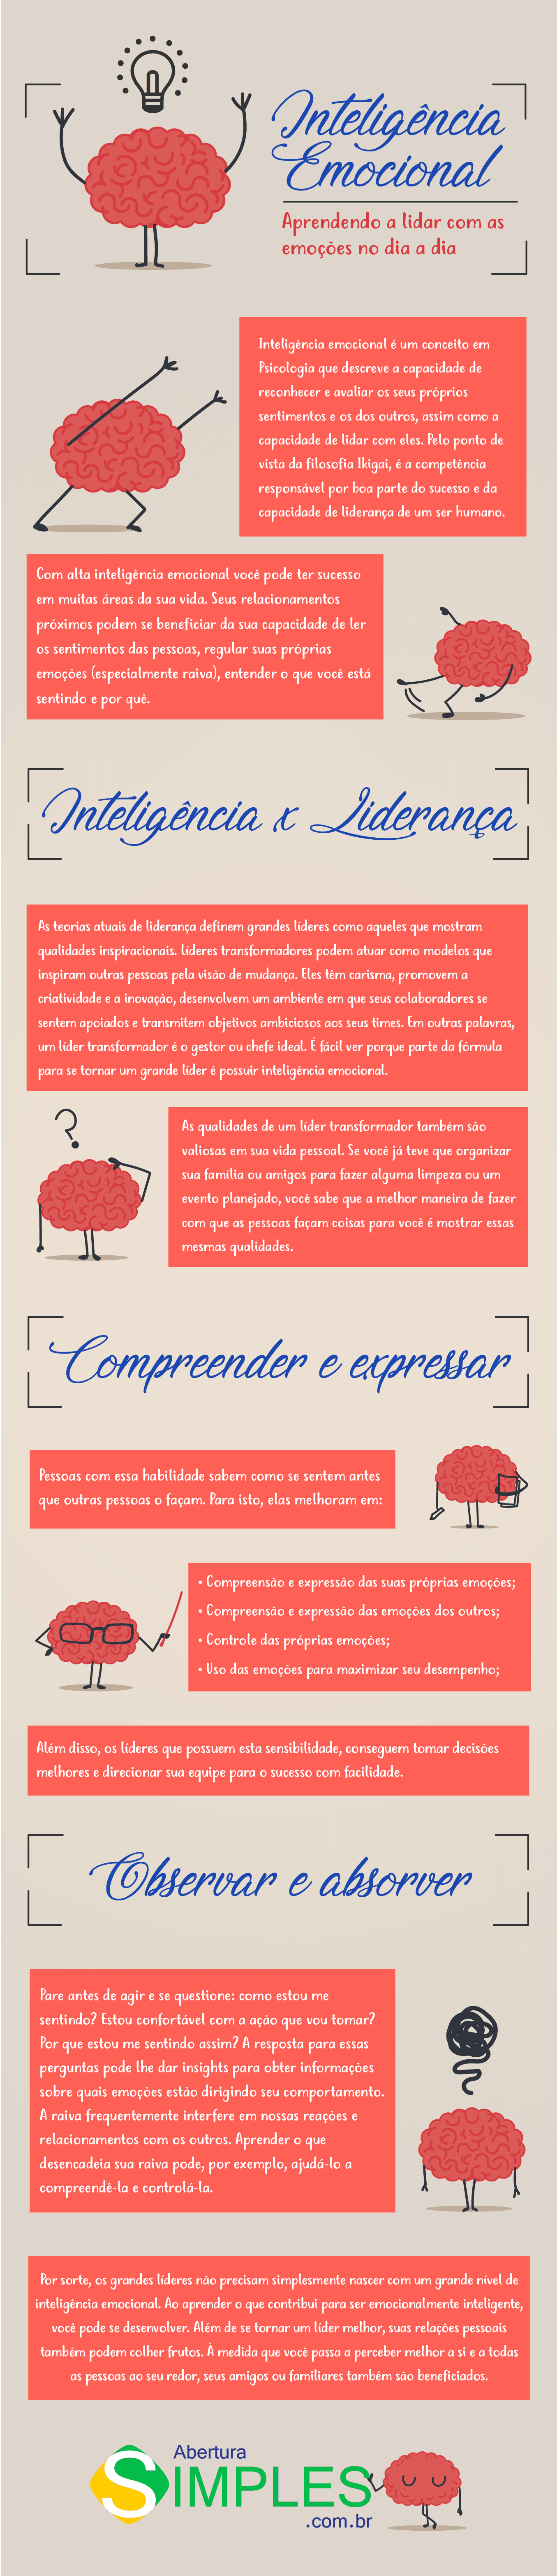 Infográfico explicando a inteligência emocional